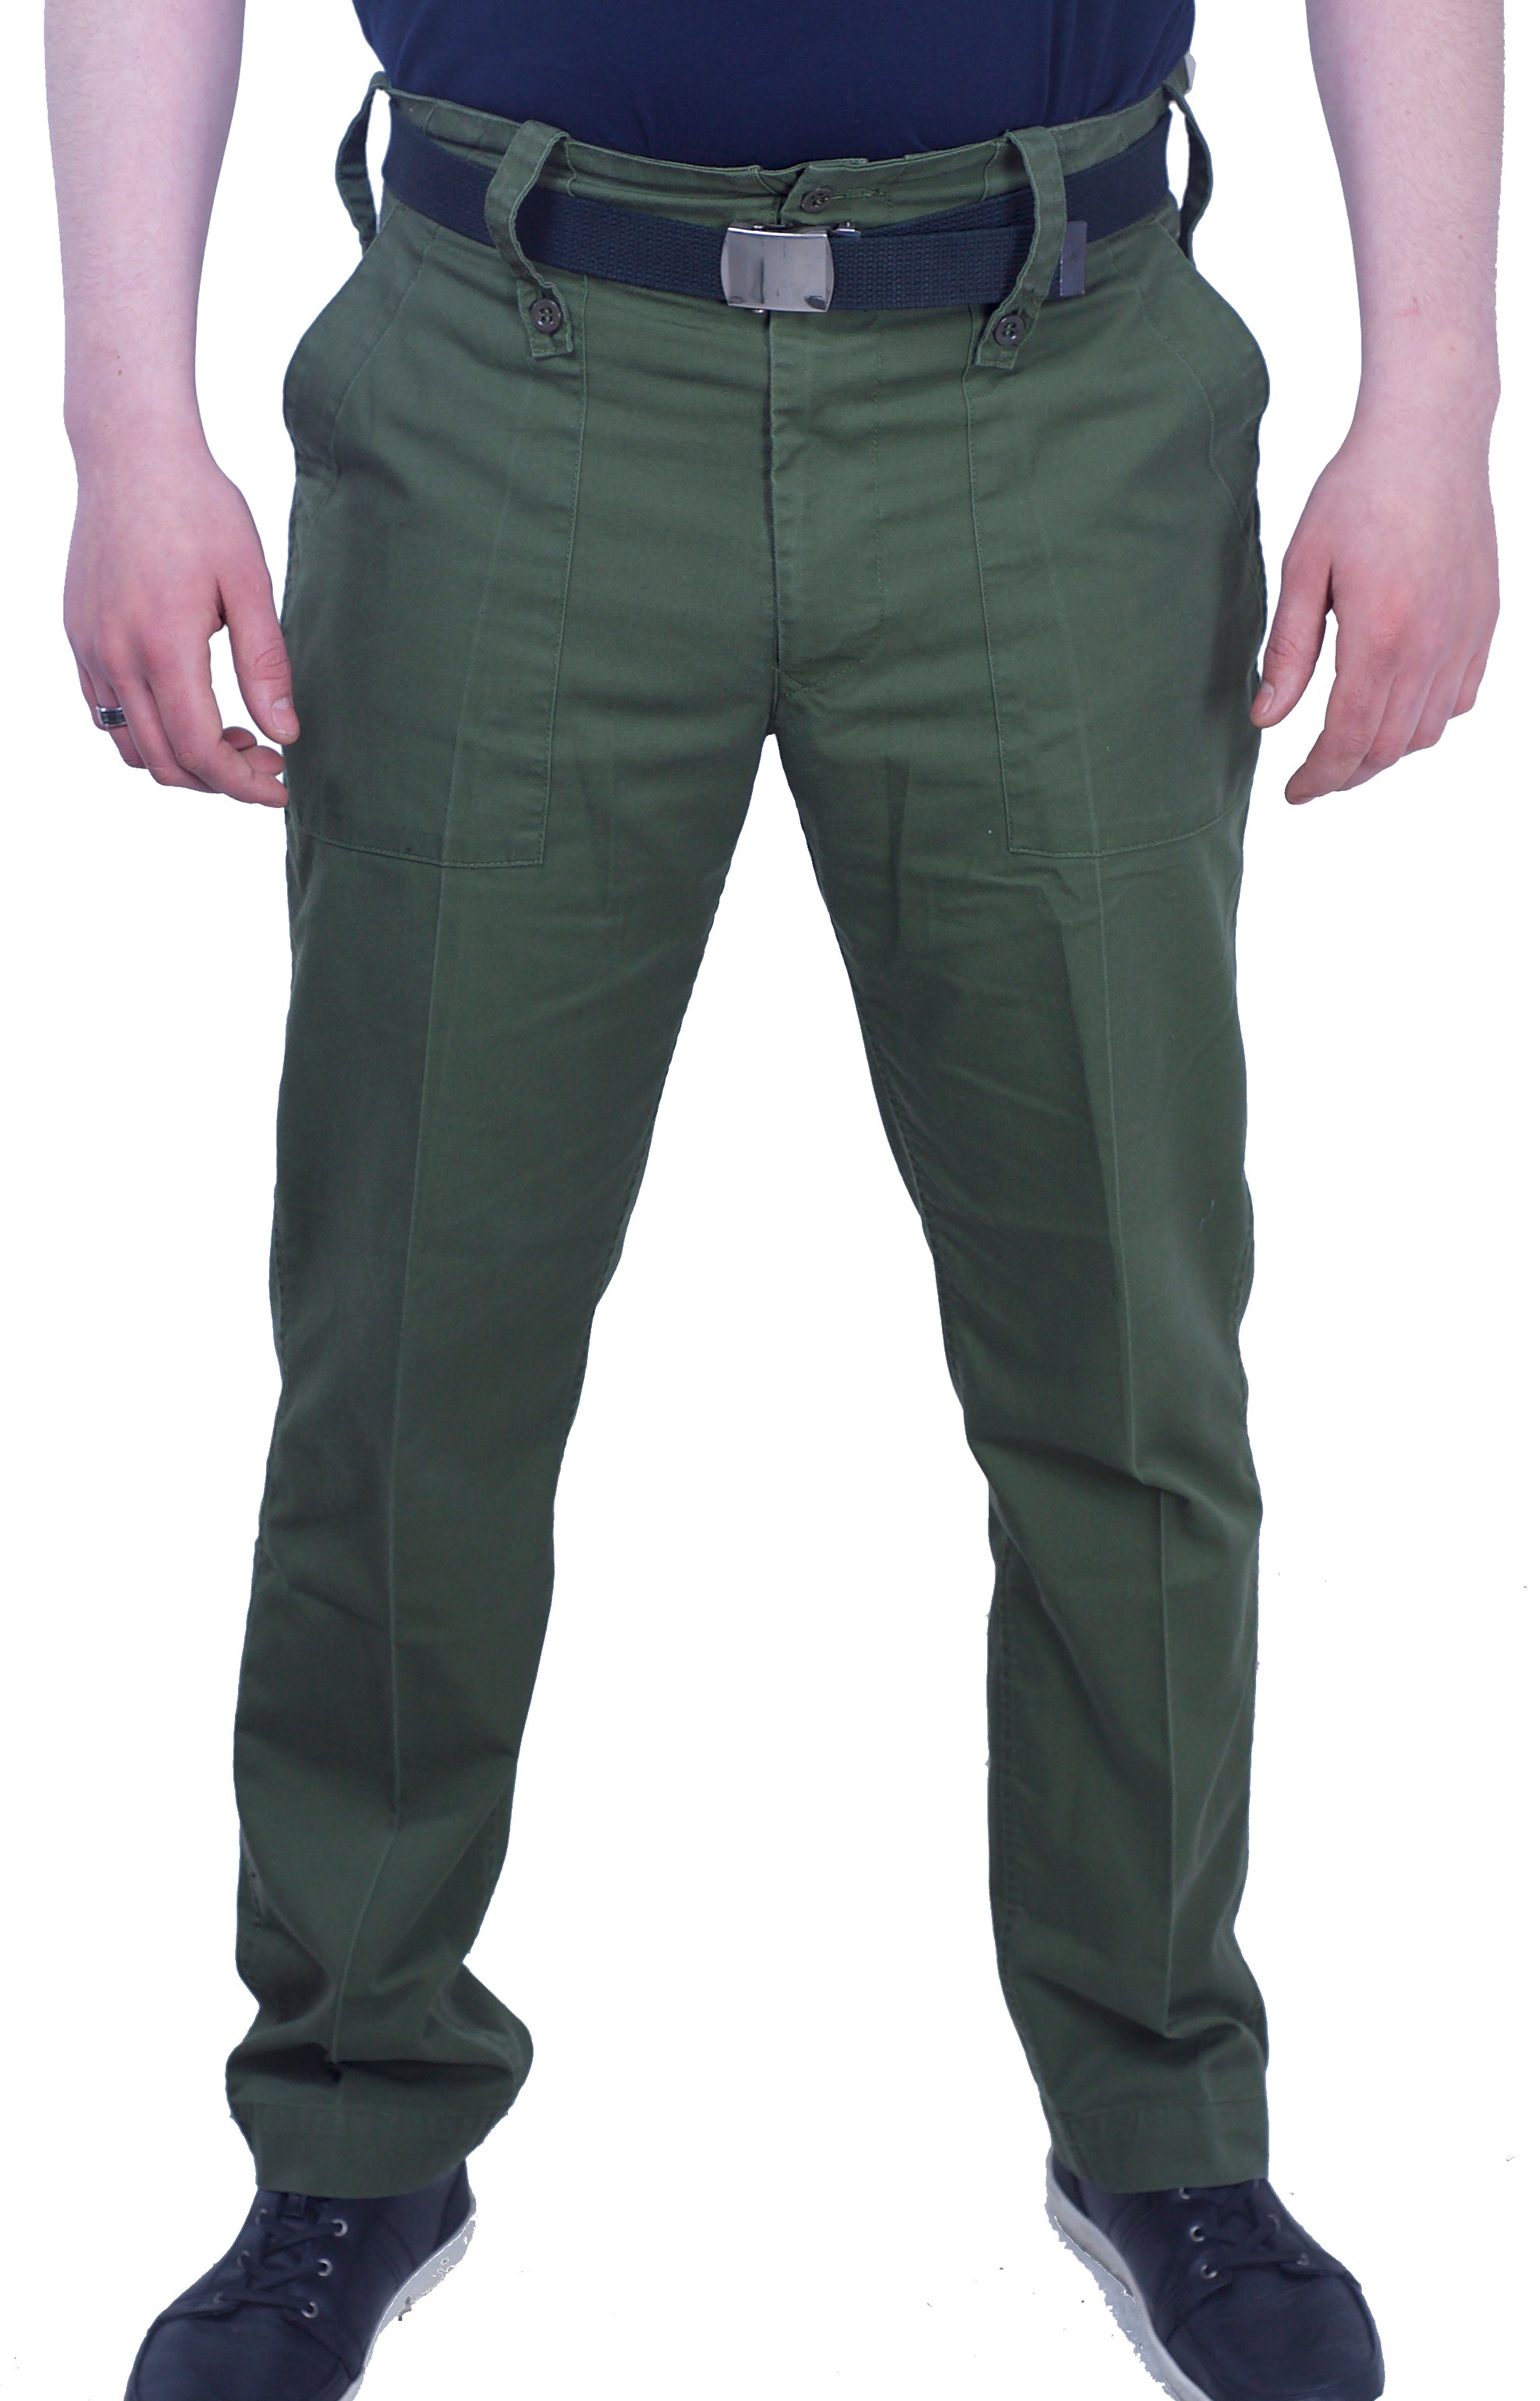 Dickies Hockinson cargo pants in military green | ASOS